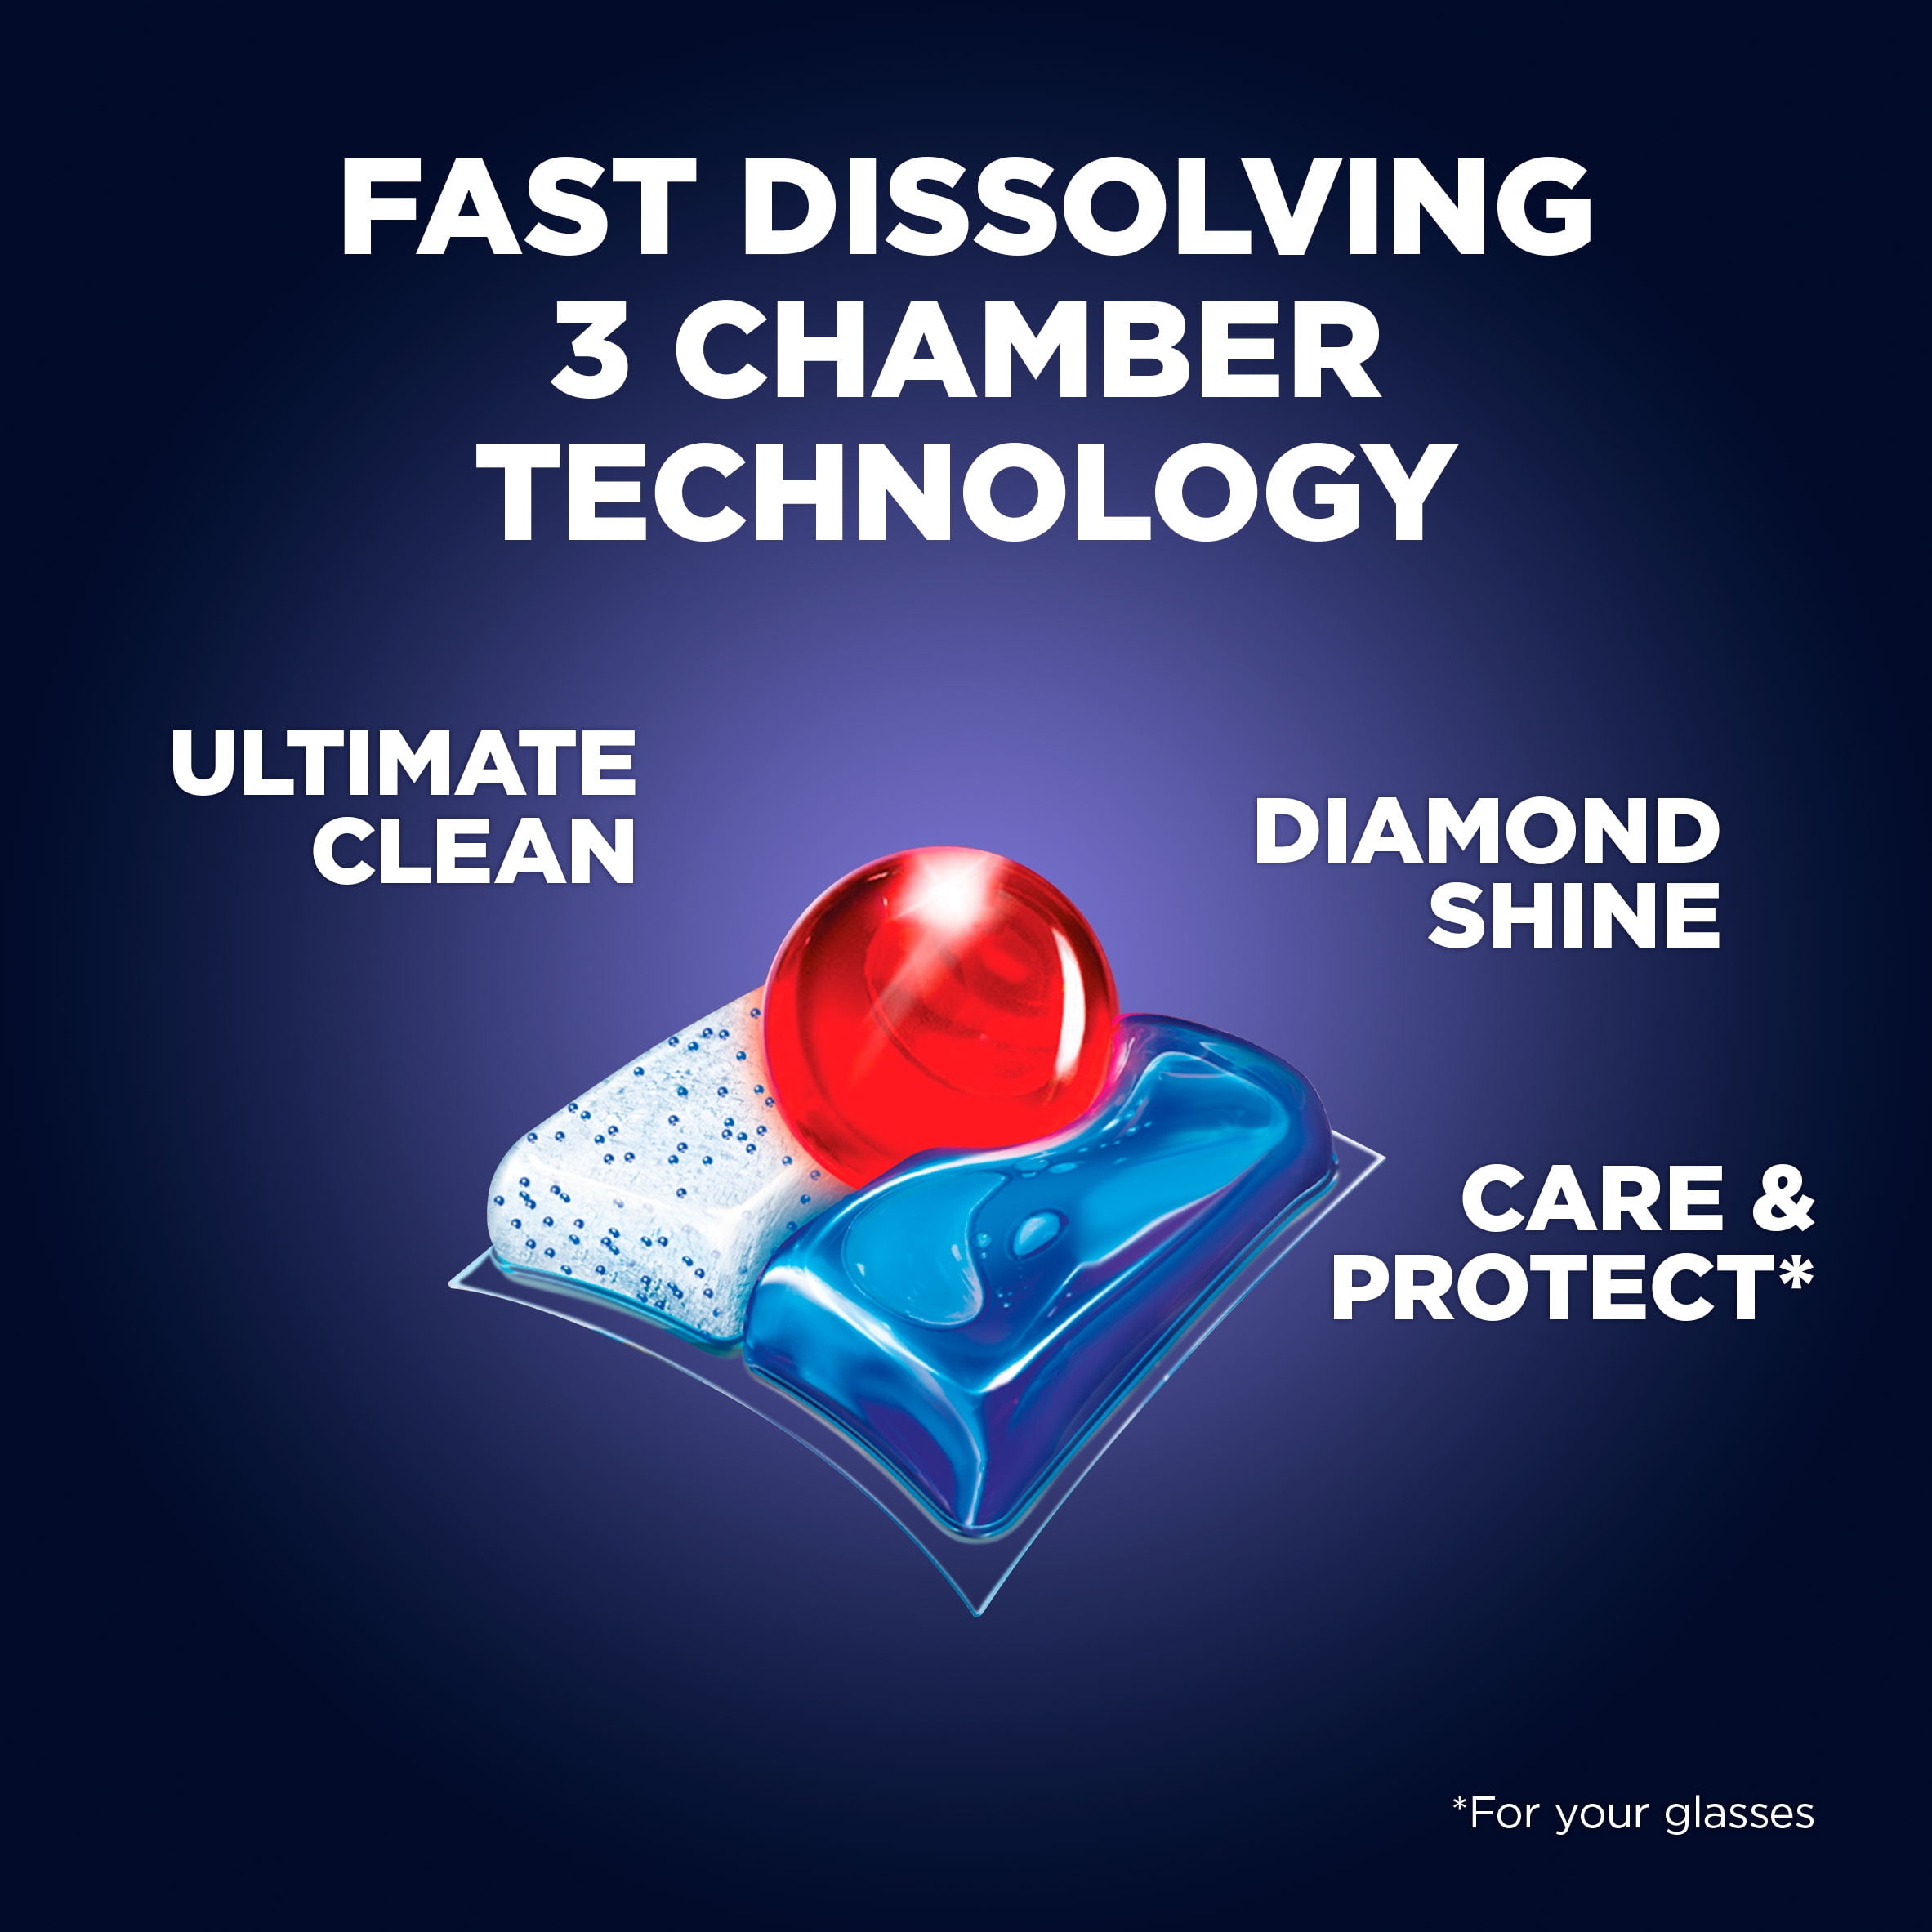 Finish Quantum Infinity Shine 70 Count Dishwasher Detergent Powerball + Jet-Dry  Rinse Aid, 23oz